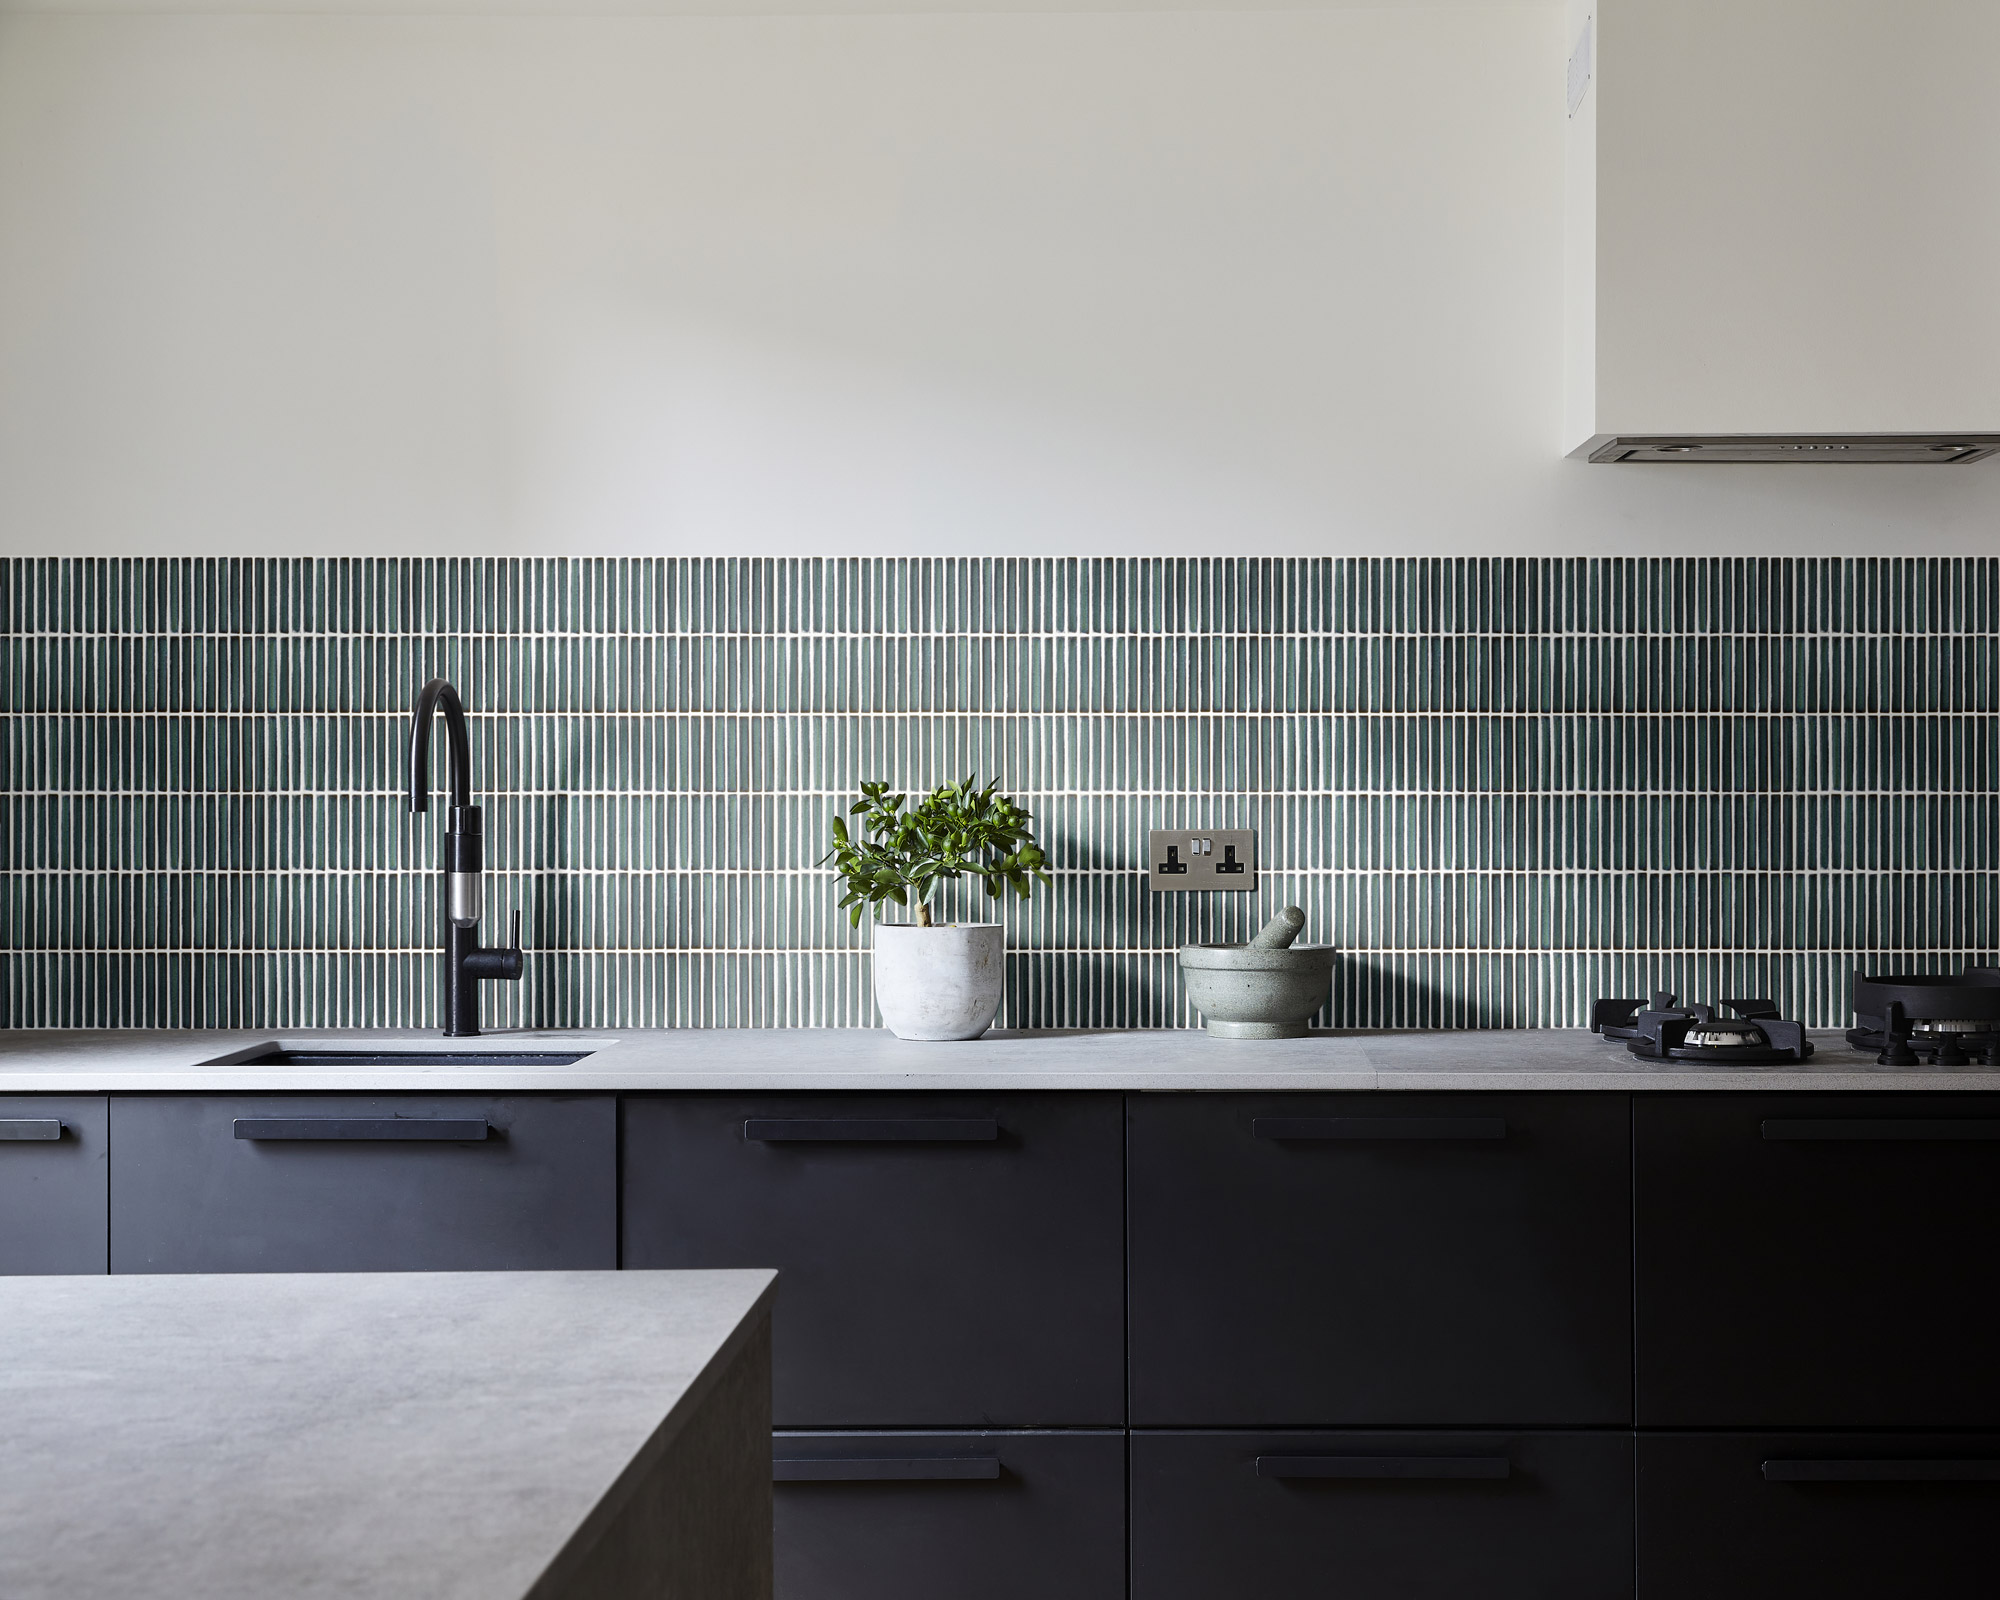 Kitchen Tile Costs Which Type Is Best, Best Tile Size For Kitchen Backsplash